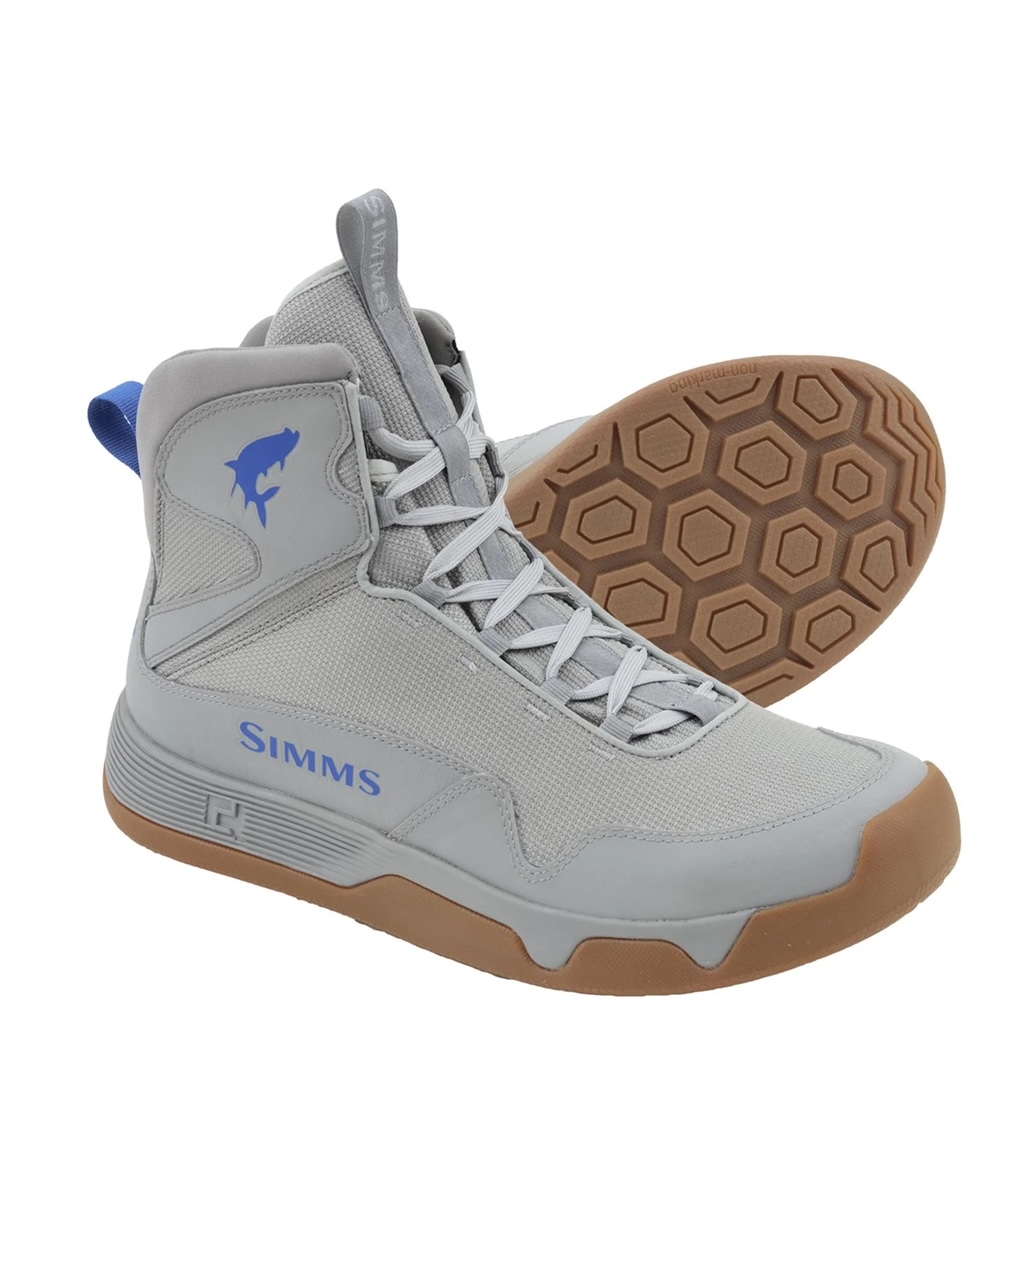 Simms Flats Sneaker Size 12